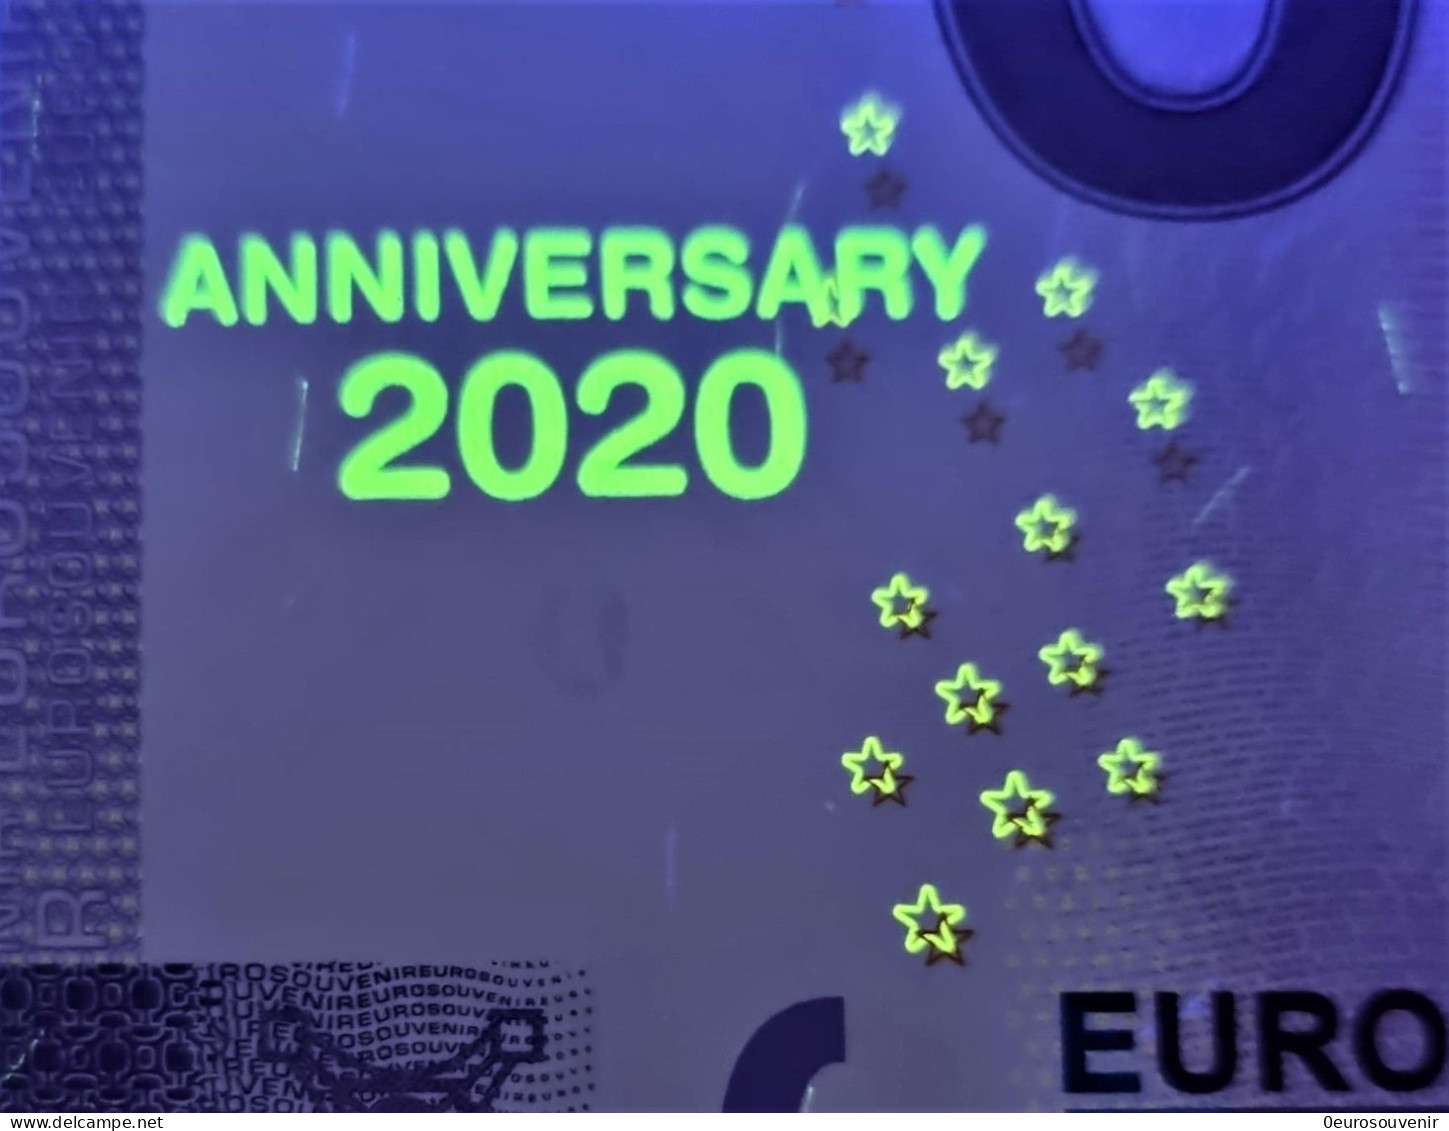 0-Euro XEGH 2020-2 HANSESTADT HATTINGEN / RUHR ALTES RATHAUS Set NORMAL+ANNIVERSARY - Essais Privés / Non-officiels